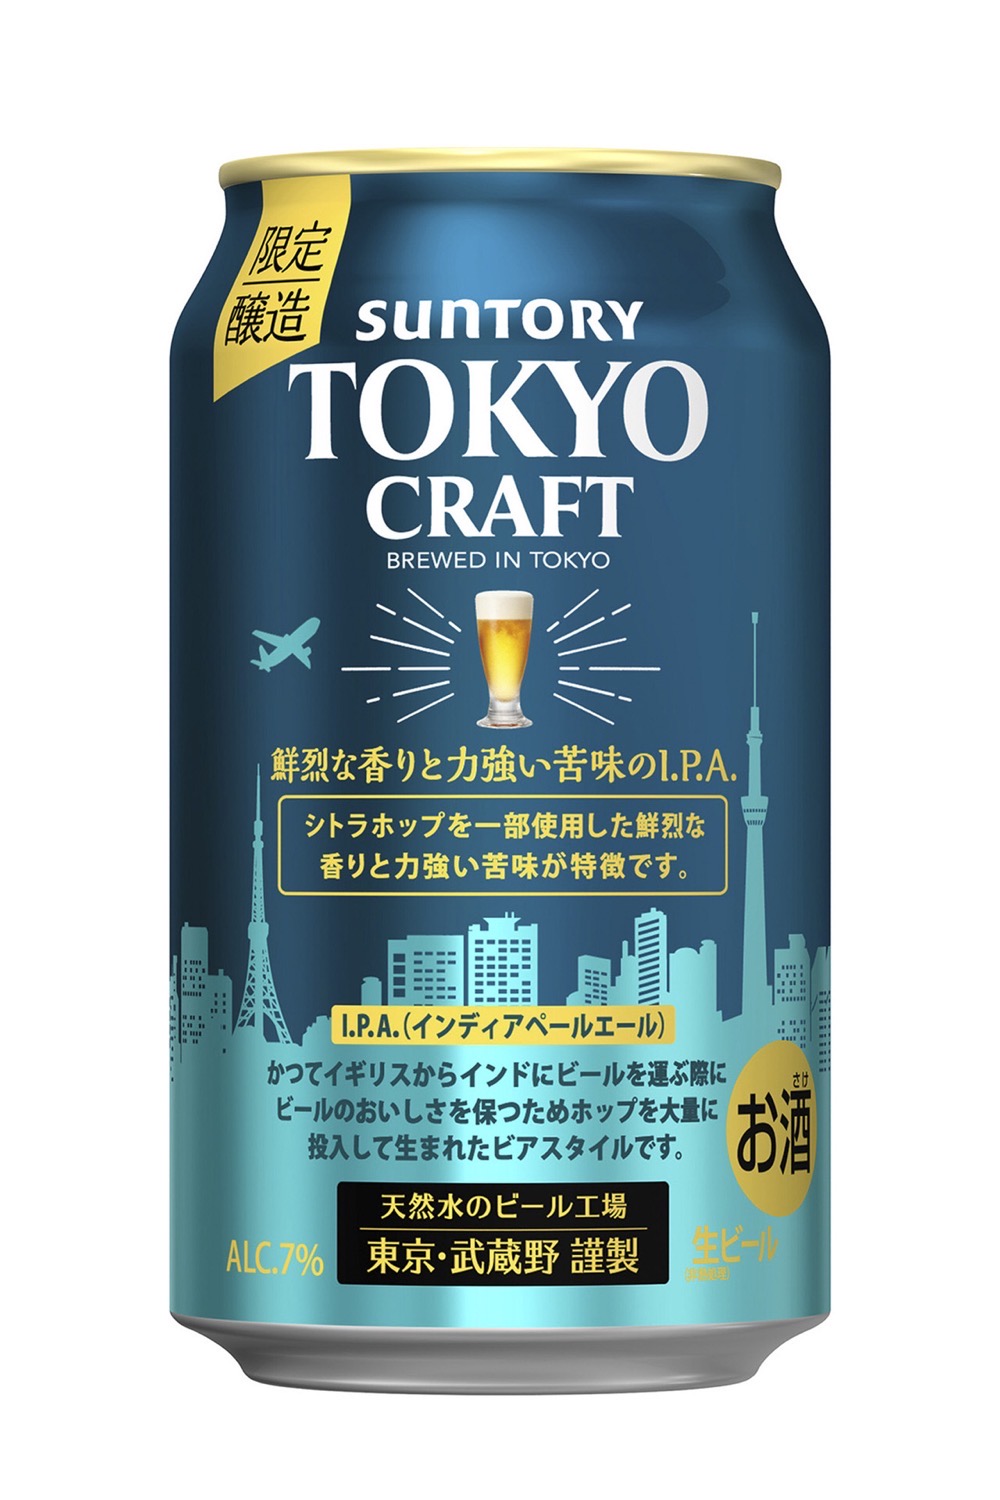 Suntory tokyo craft 003 202103